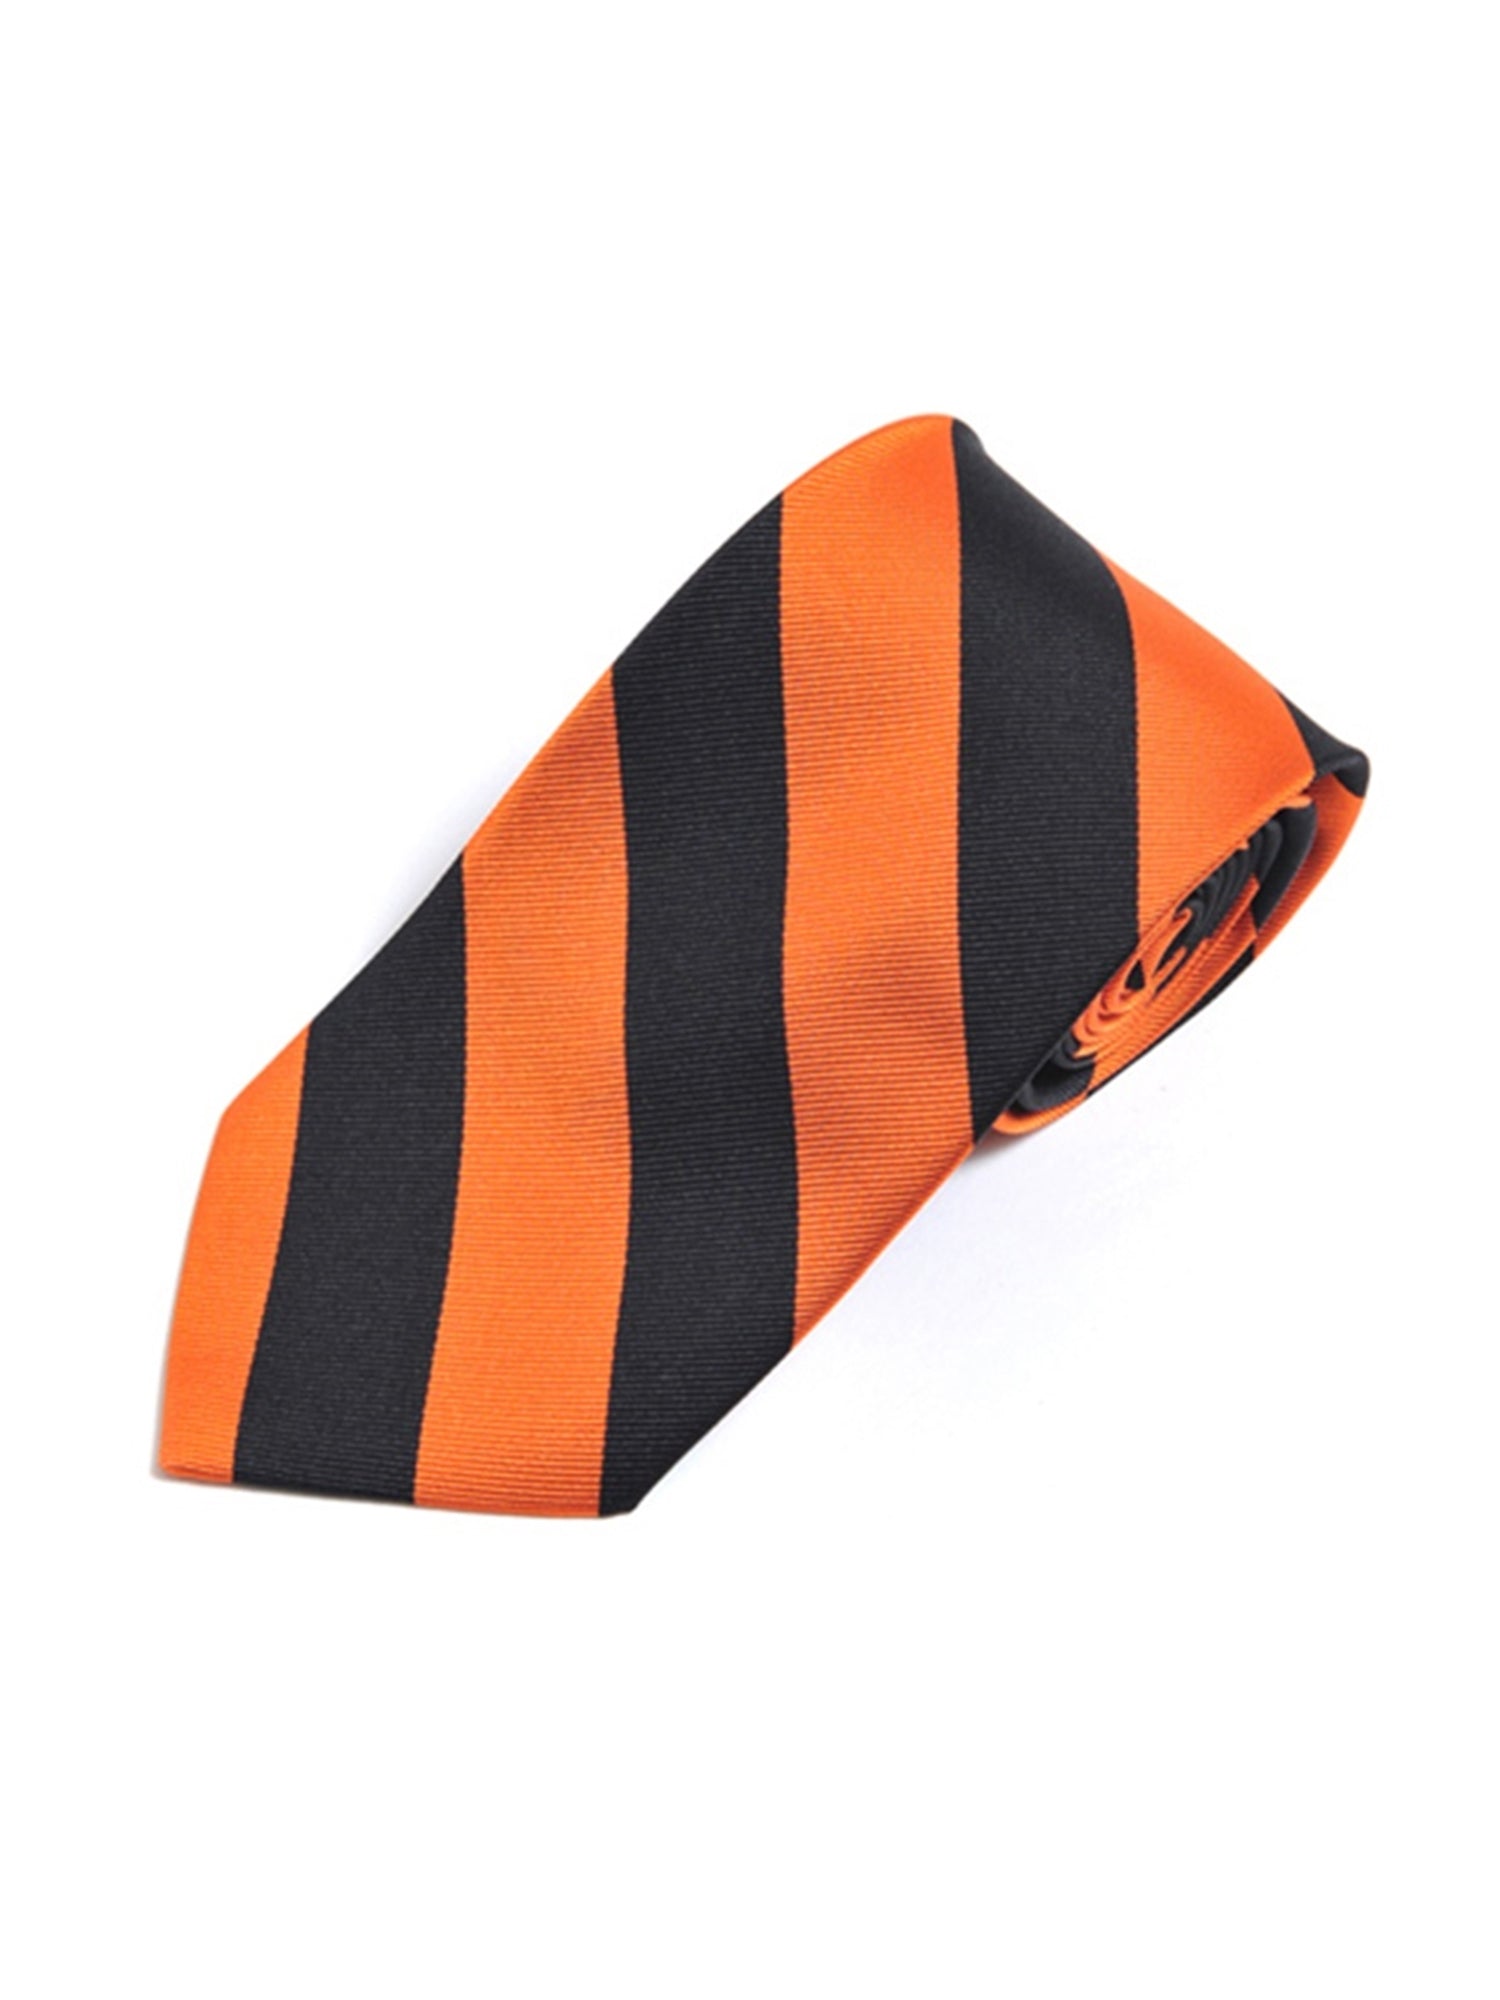 Men's College Striped Colored Silk Long Or X-Long Neck Tie Neck Tie TheDapperTie Orange & Black 57" long & 3.25" wide 